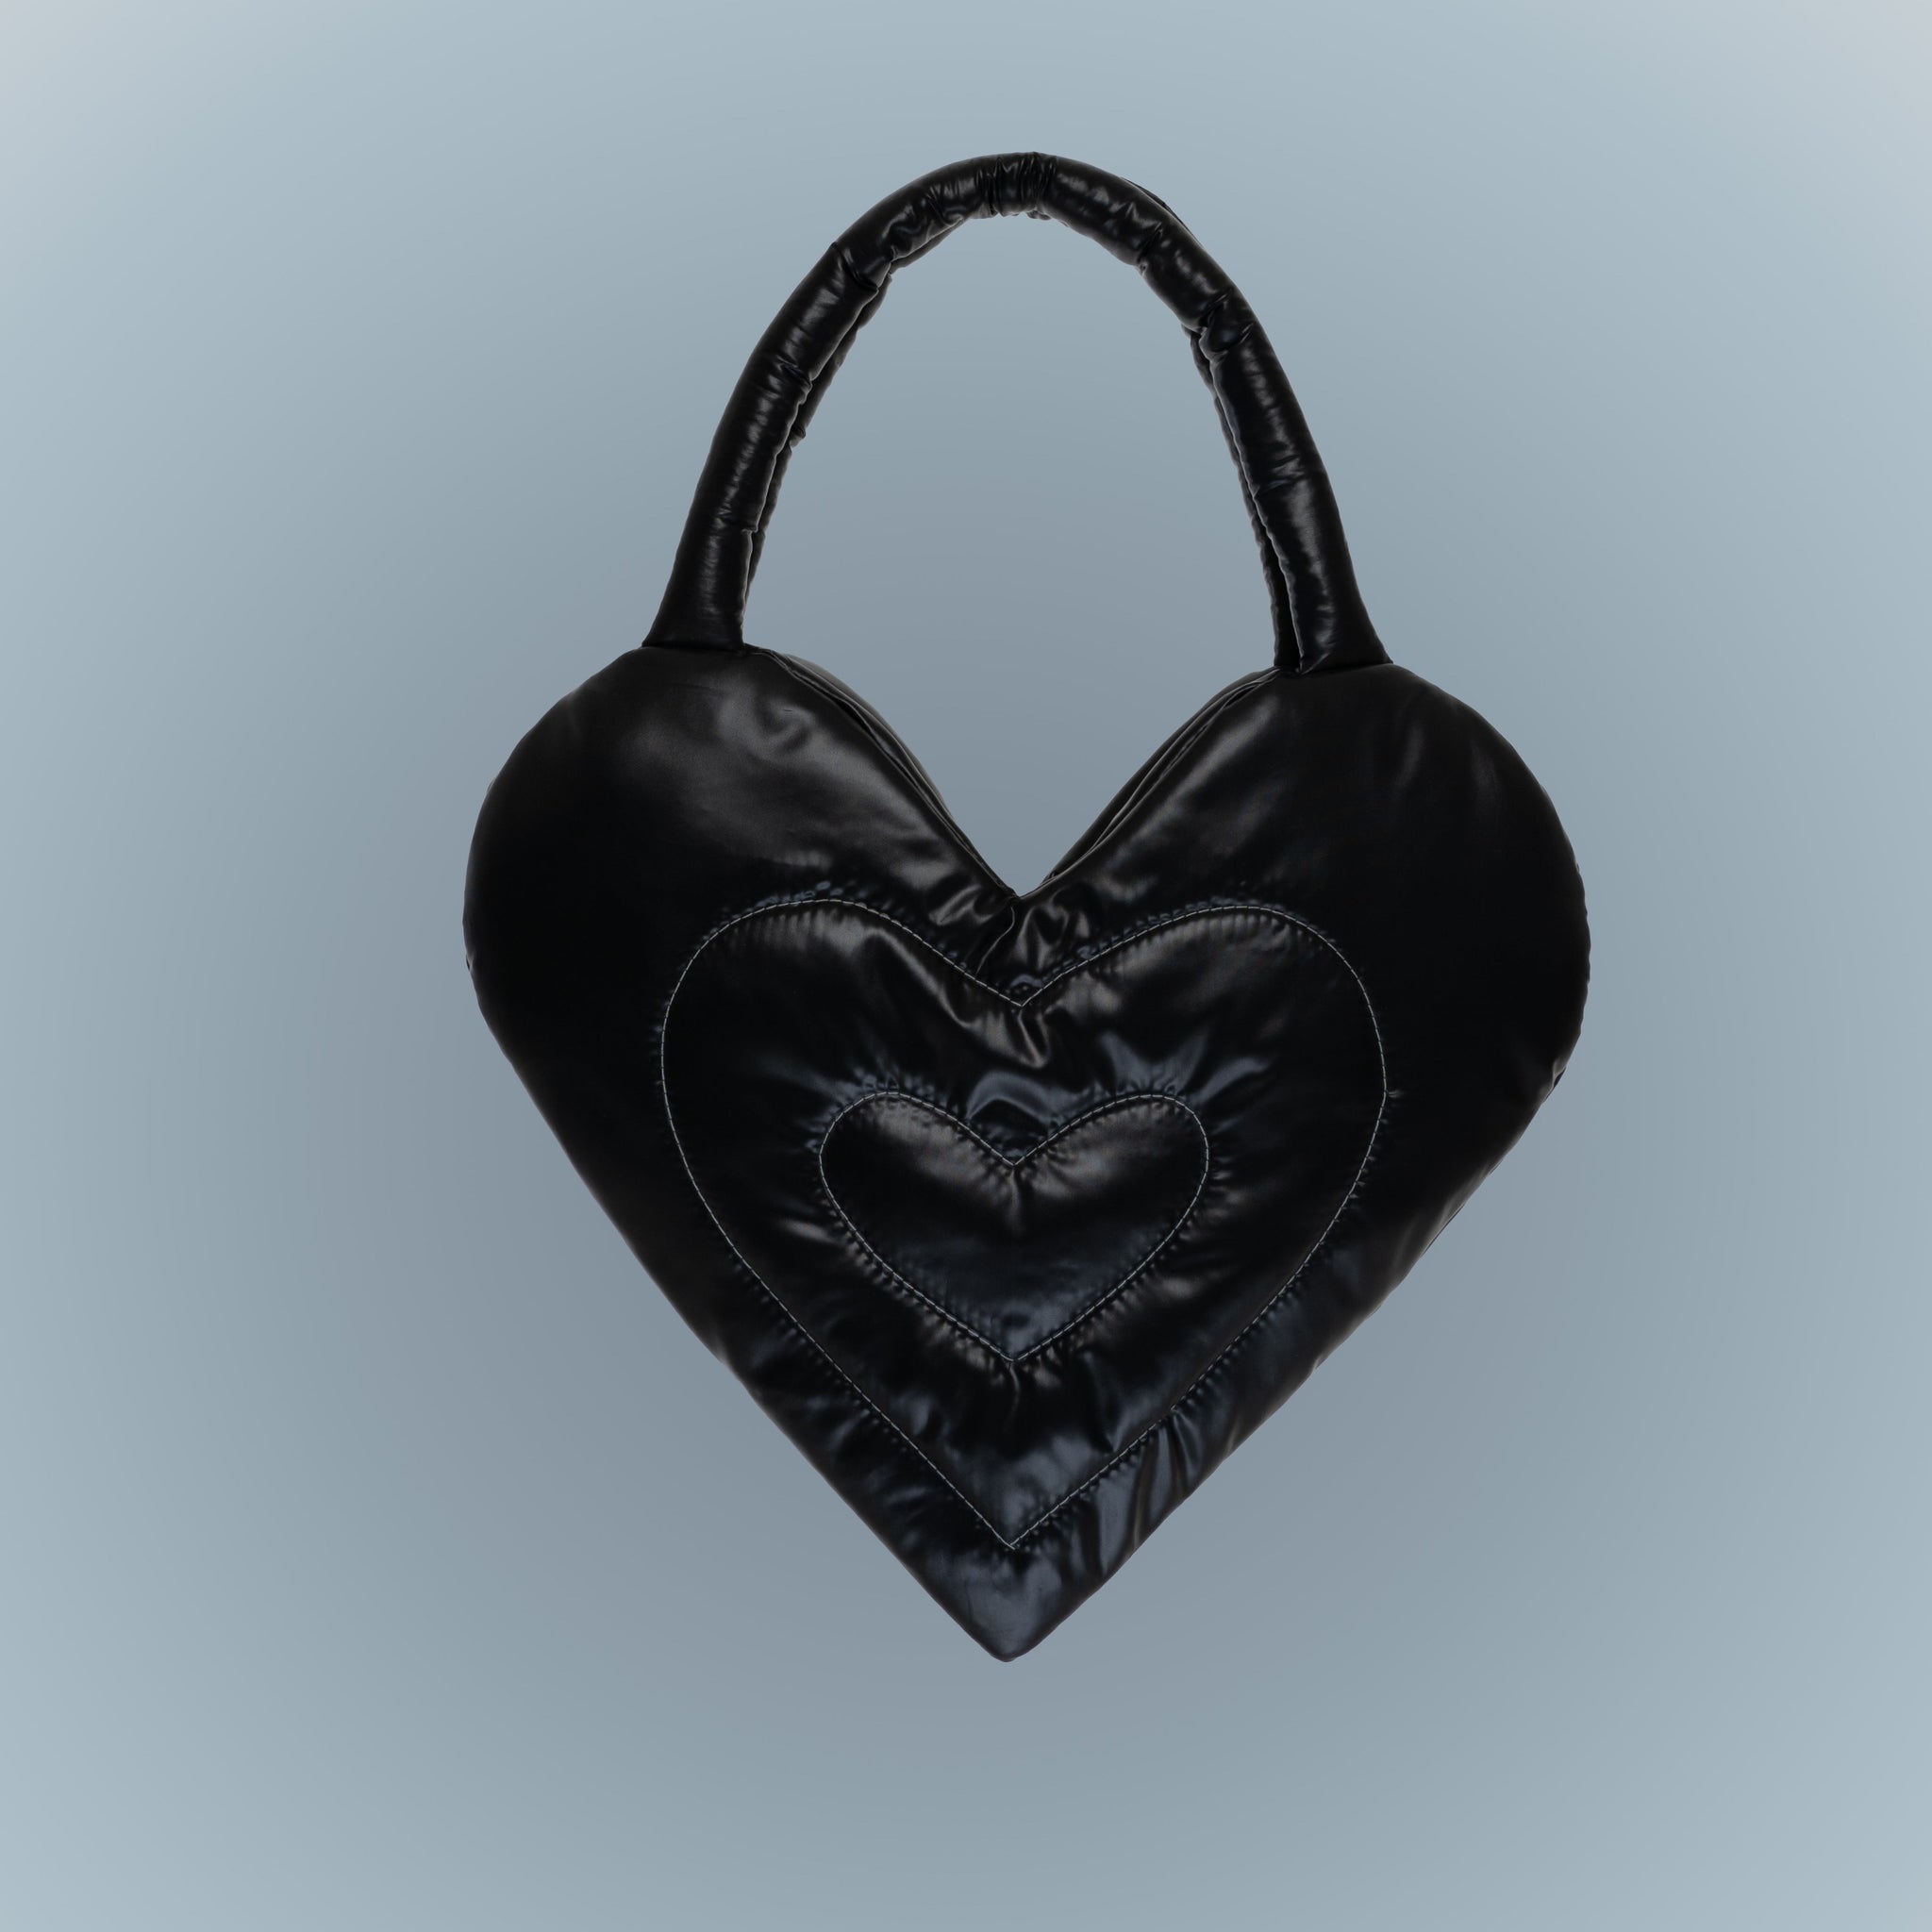 Black Puffer Bag